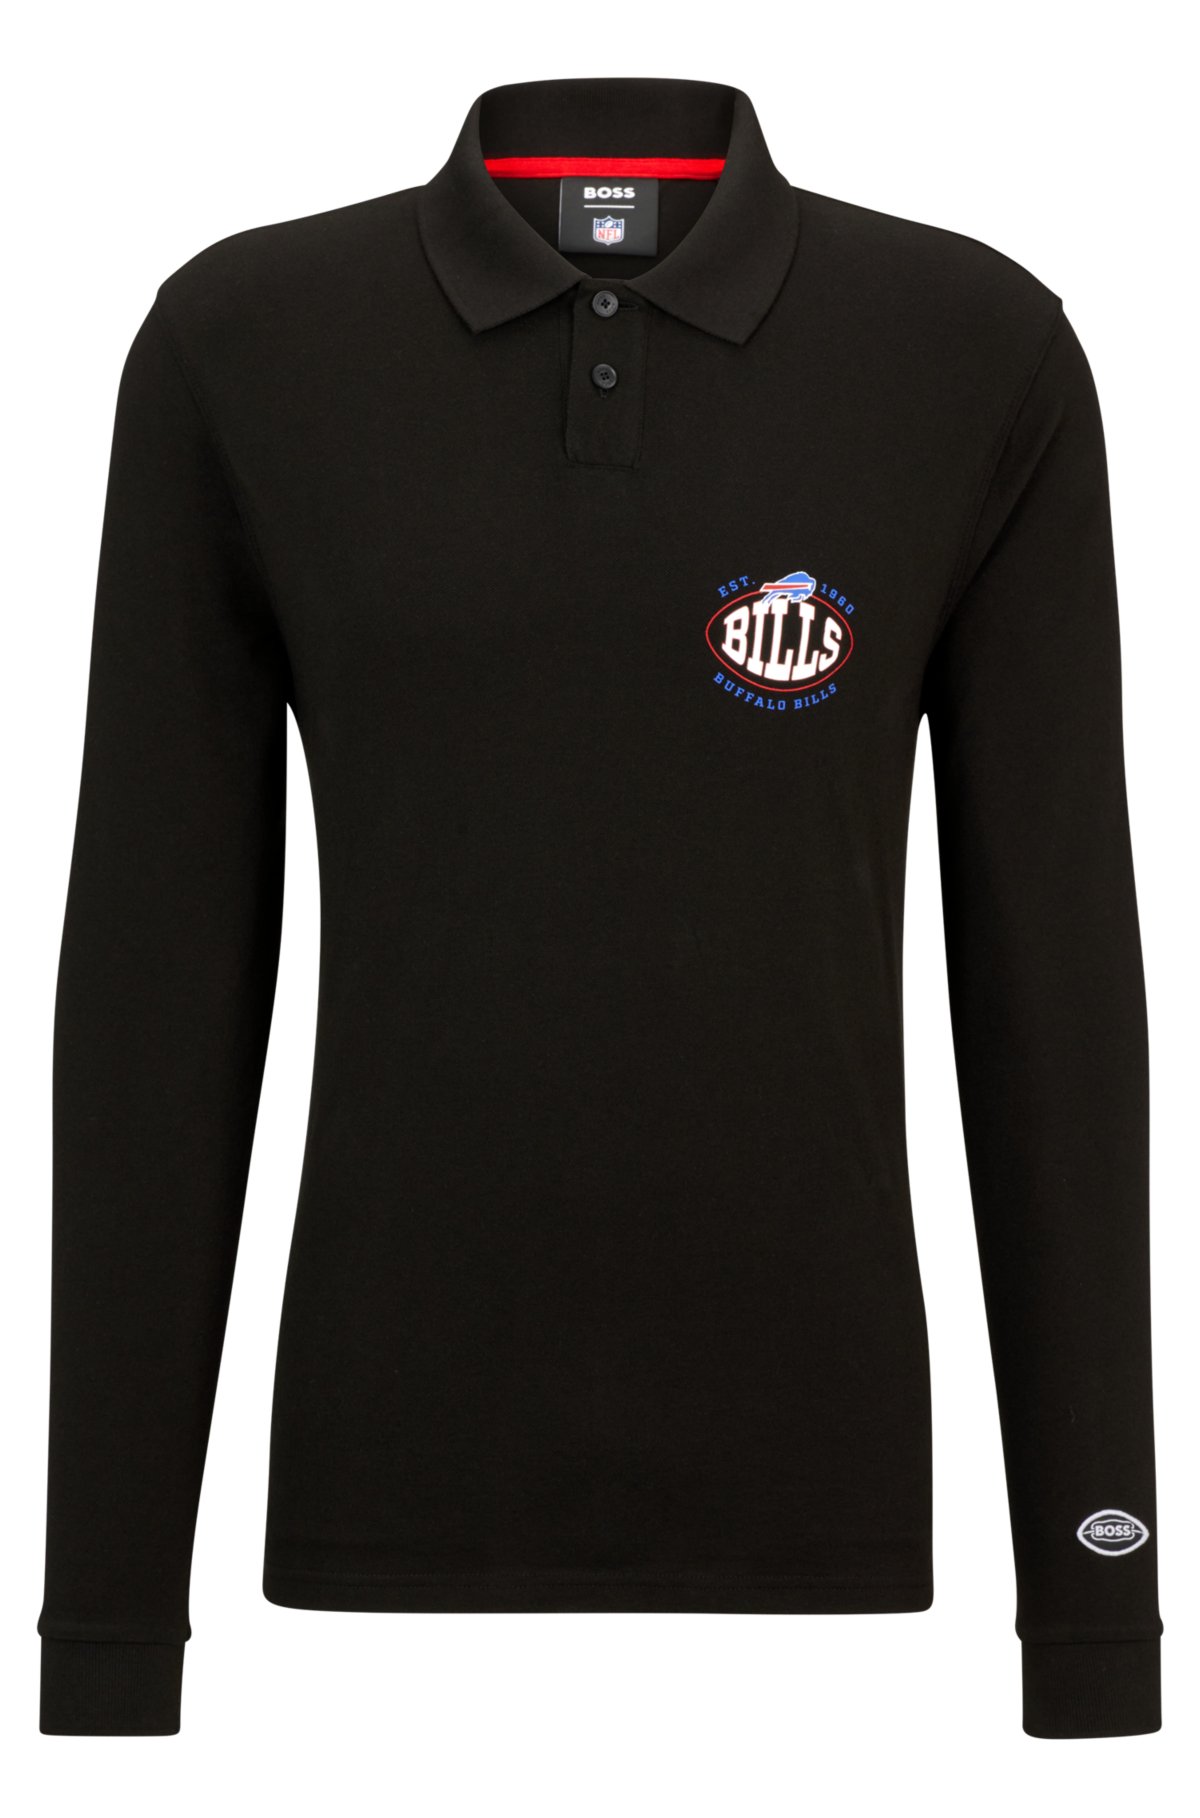 BOSS x NFL long-sleeved polo shirt with collaborative branding, Bills